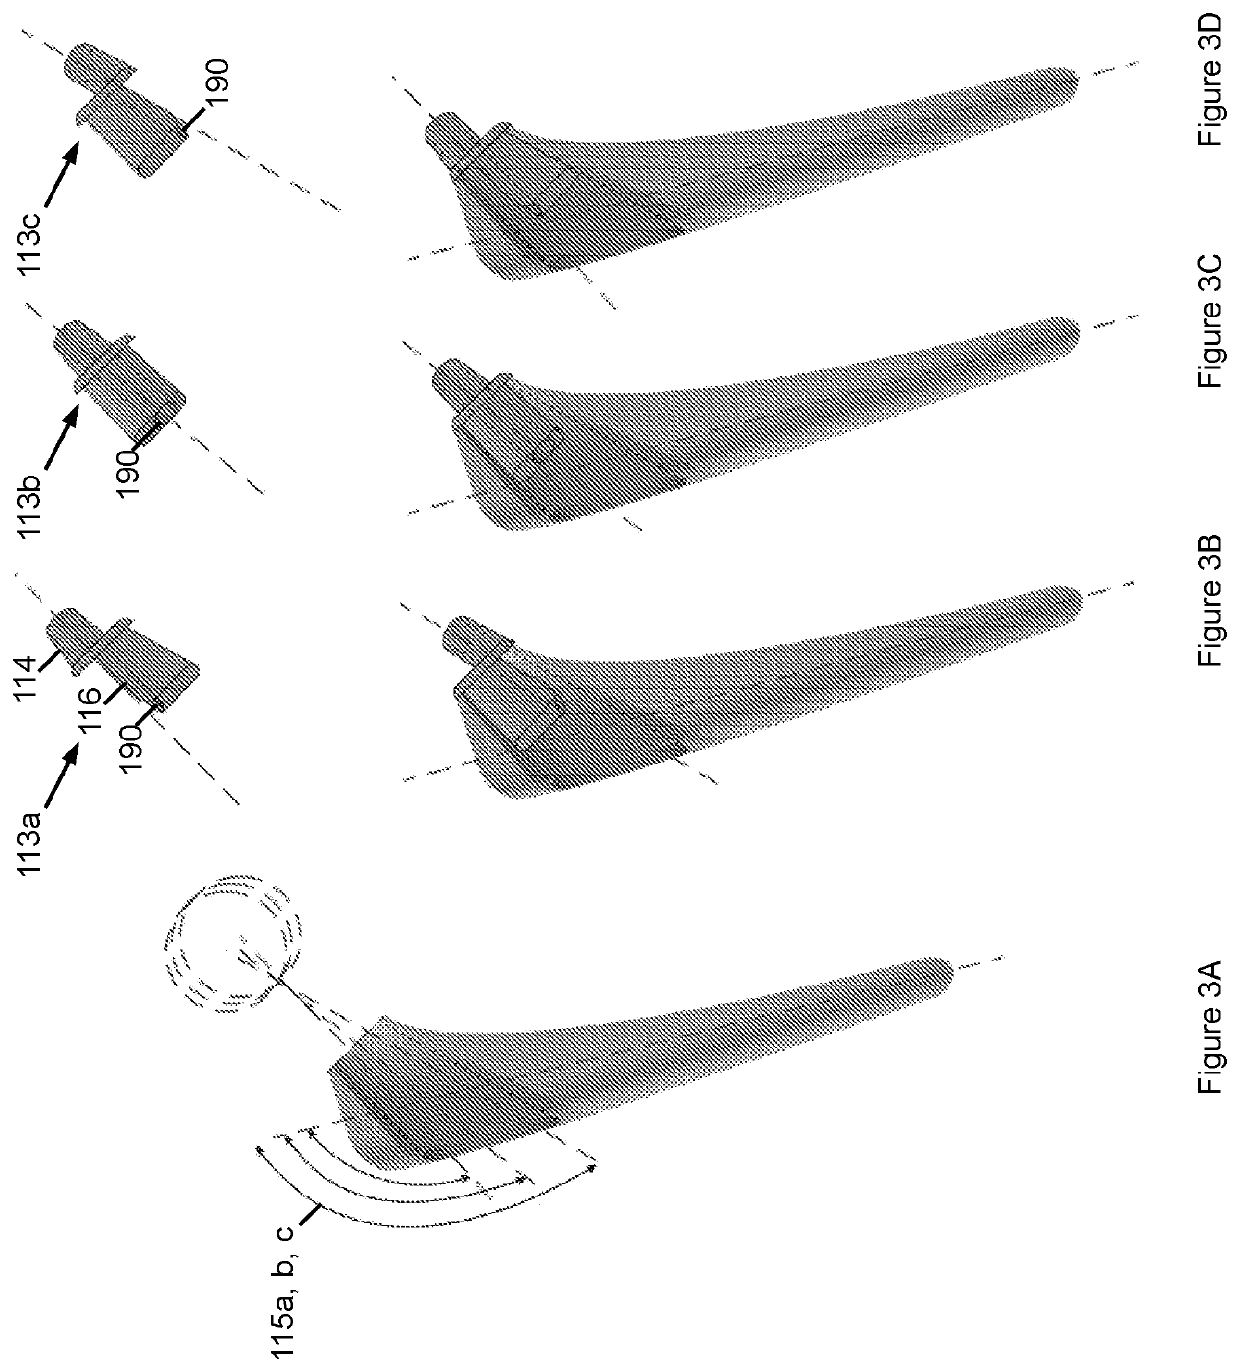 Minimally invasive hip arthroplasty techniques and apparatus